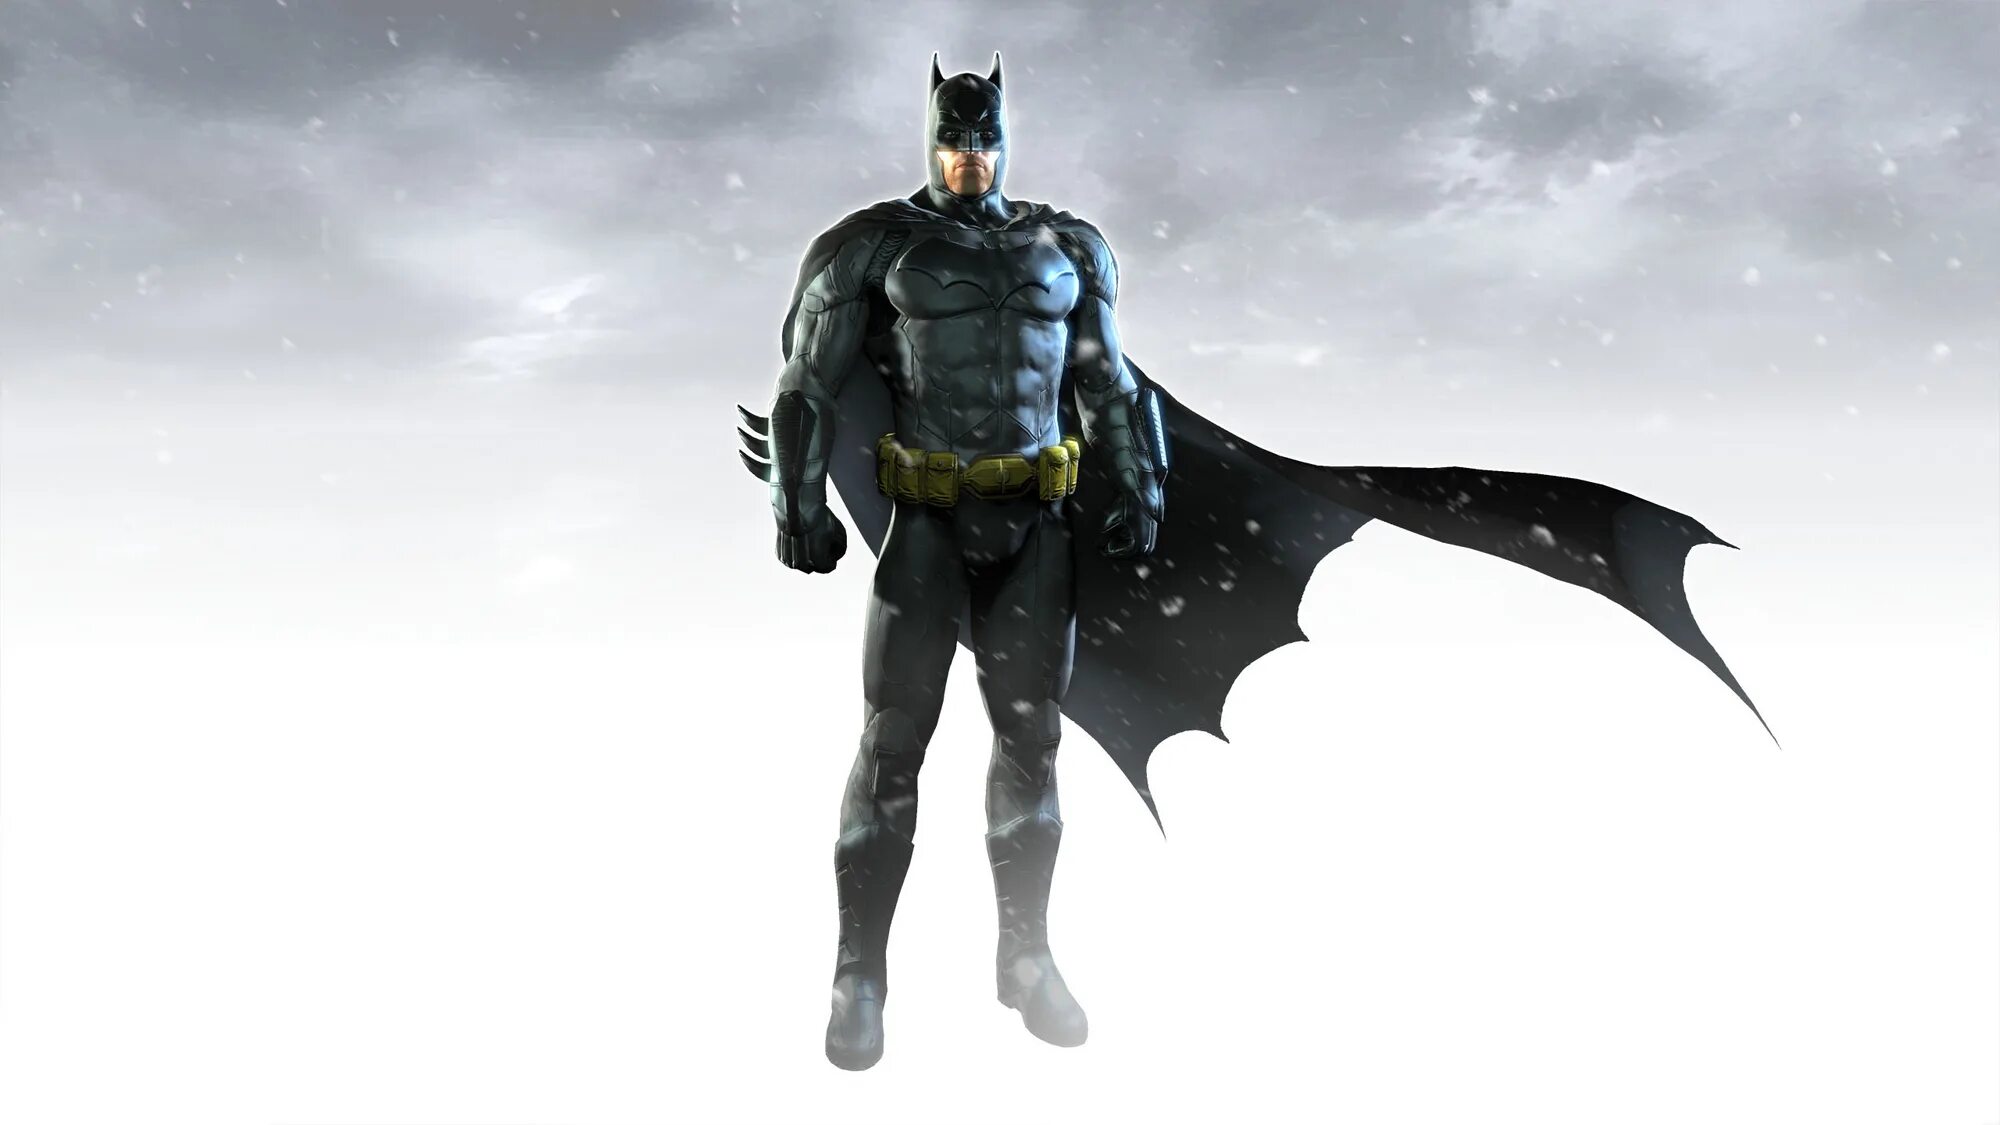 Нью 52 Бэтмен костюм Бэтмен Аркхем Оригинс. Batman Arkham Knight New 52. Бэтмен Аркхем ориджинс New 52. Костюм Бэтмена Аркхем Оригинс.